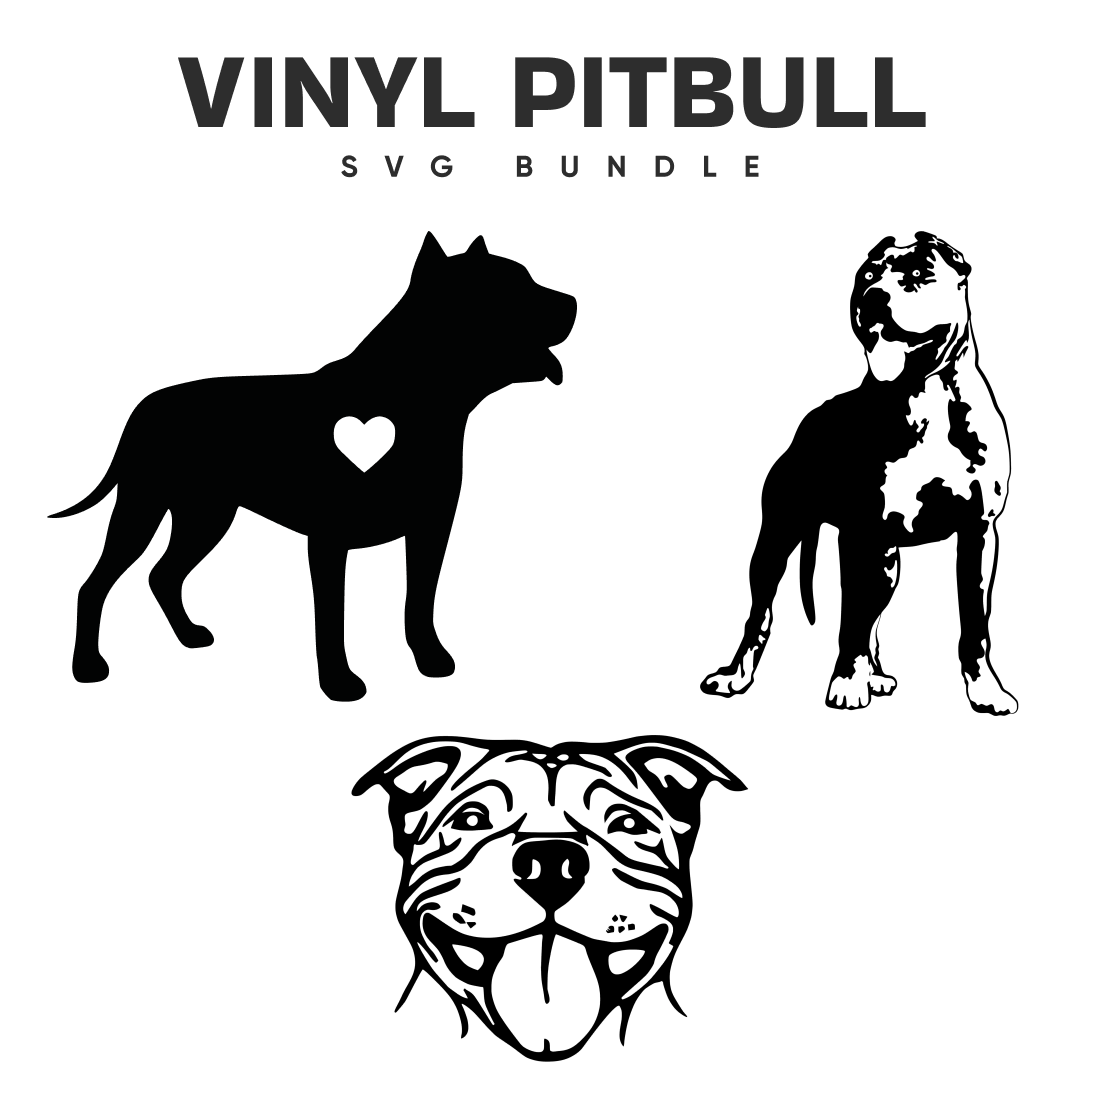 Prints of vinyl pitbull svg bundle.